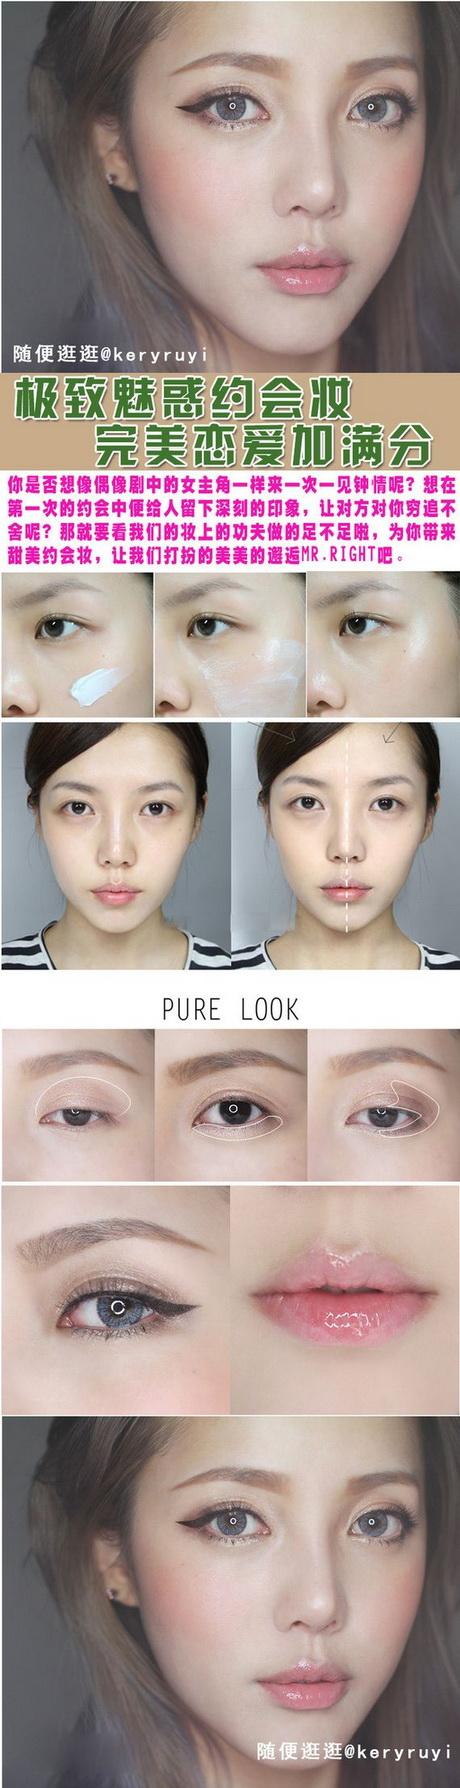 face-powder-makeup-tutorial-72_9 Face powder make-up tutorial